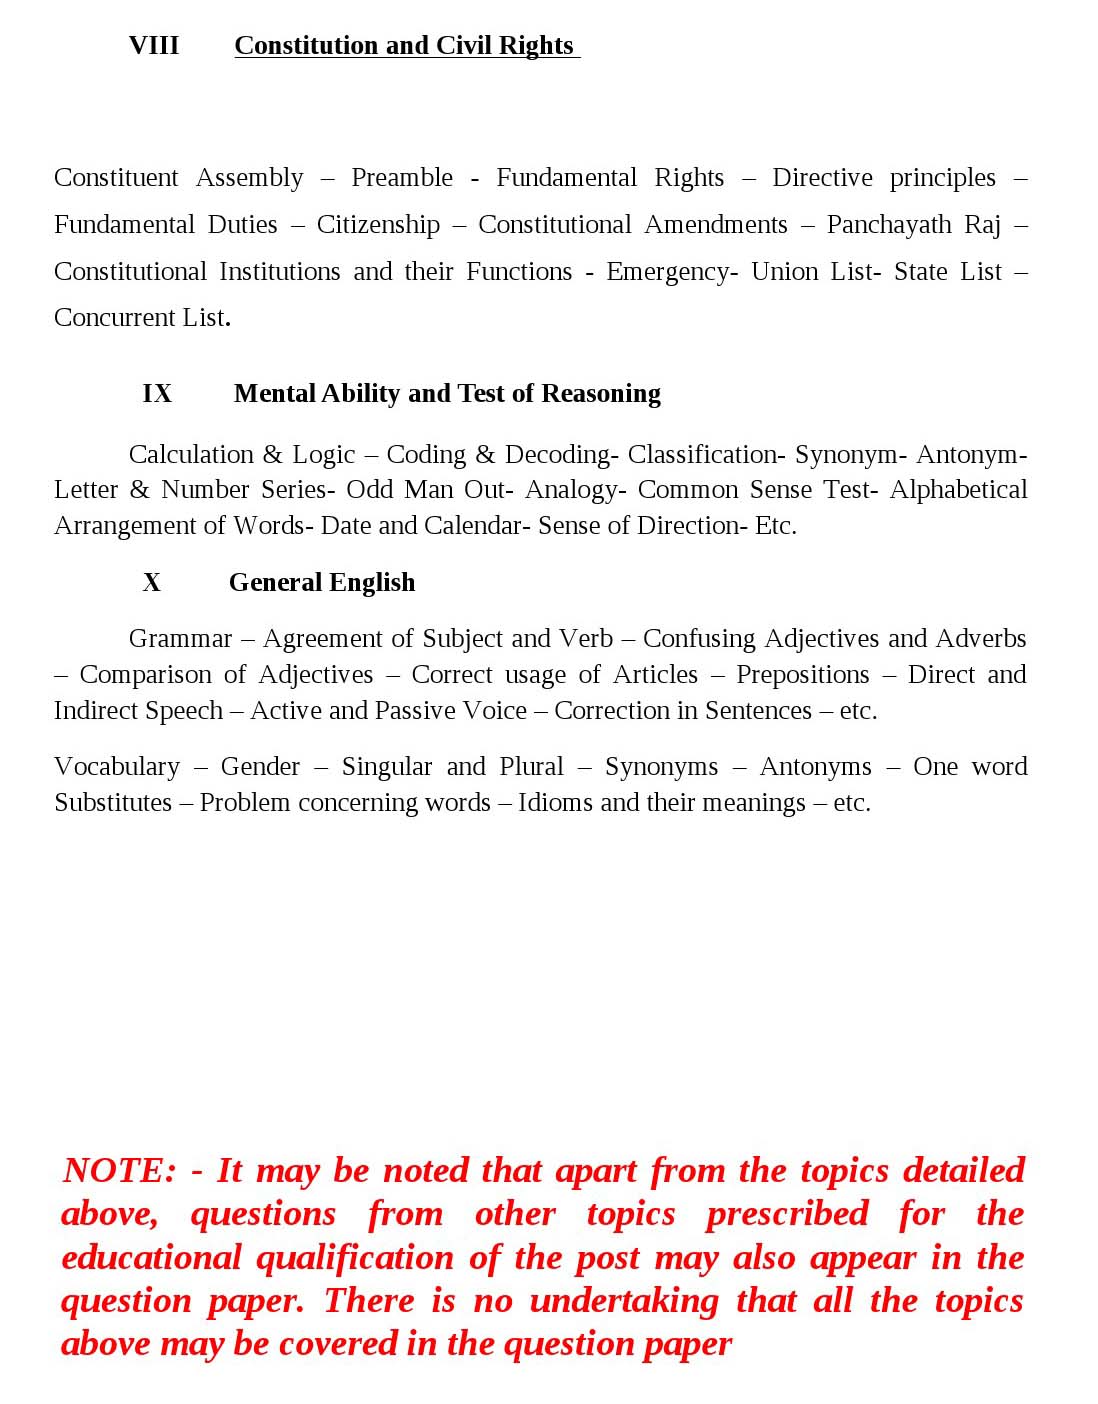 Kerala PSC Food Safety Officer Exam Syllabus May 2020 - Notification Image 4